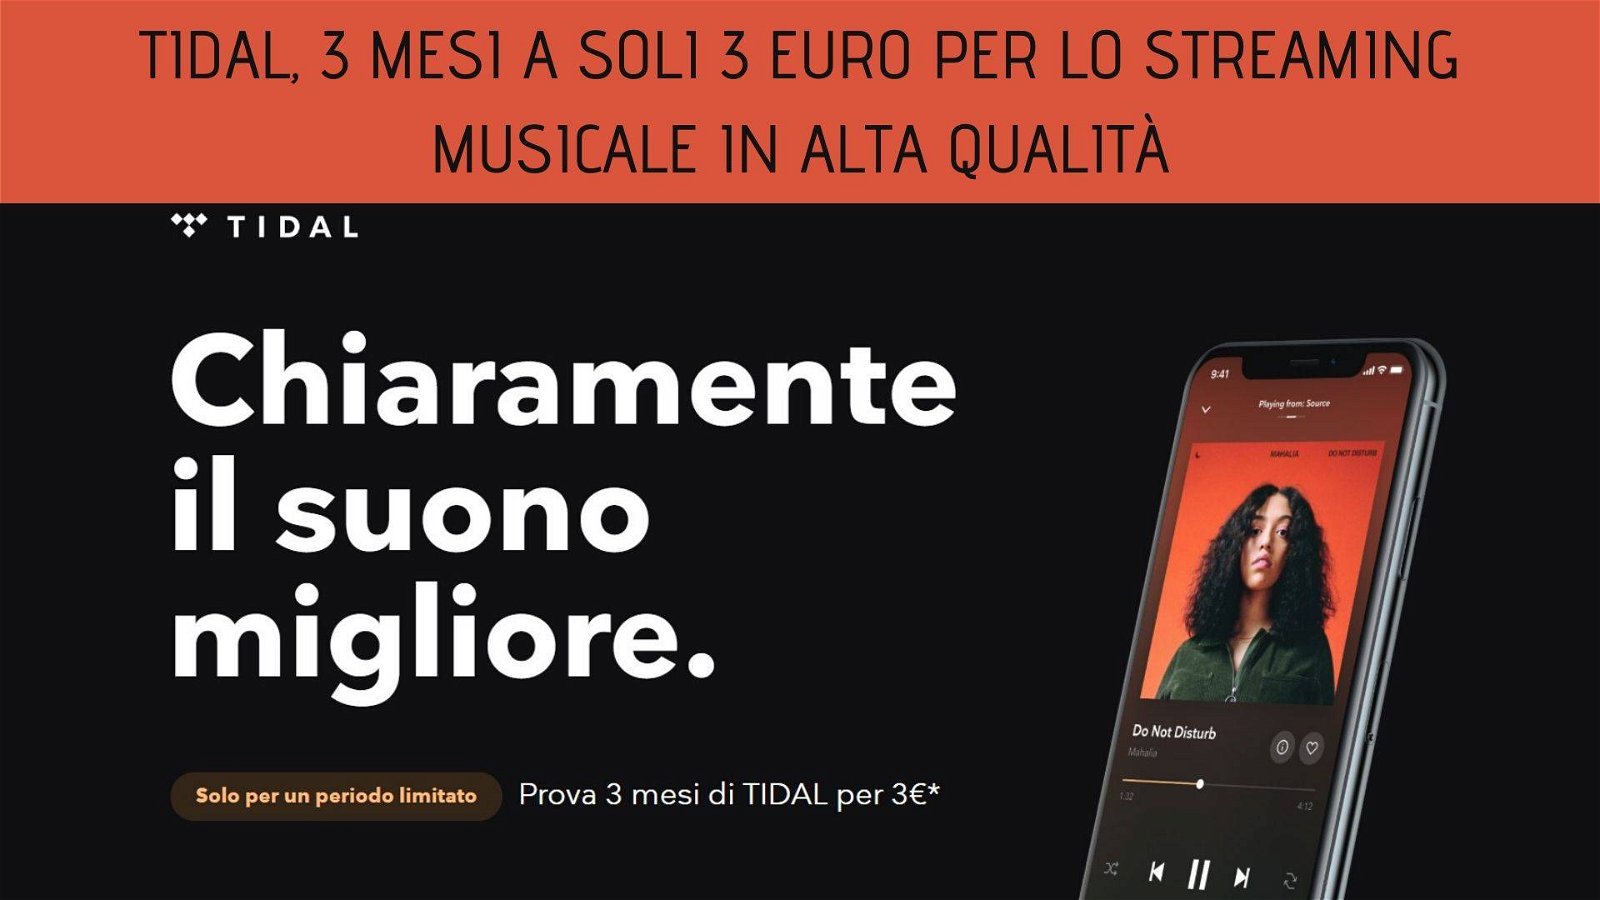 Immagine di Tidal, 3 mesi a soli 3 euro per lo streaming musicale in alta qualità